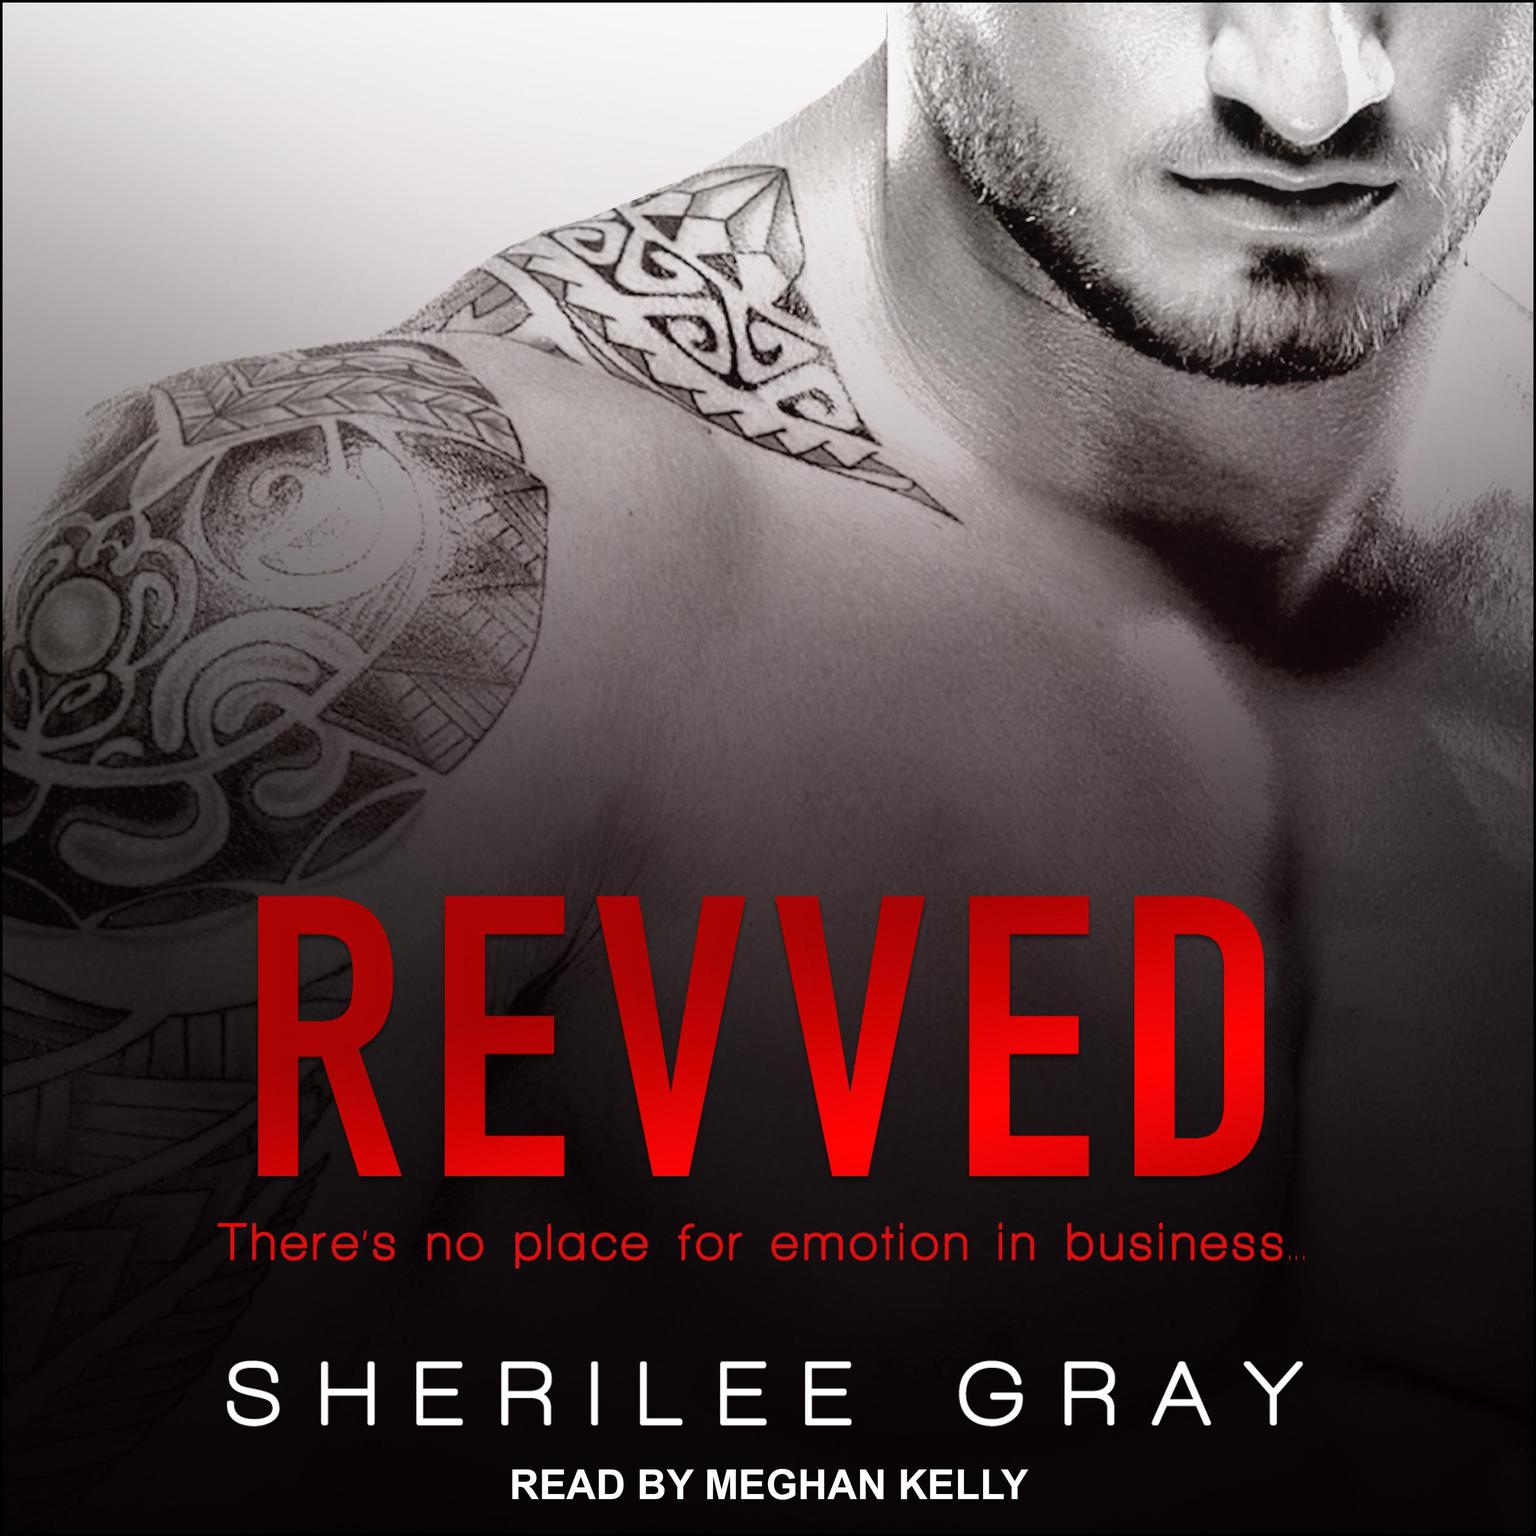 Revved Audiobook, by Sherilee Gray